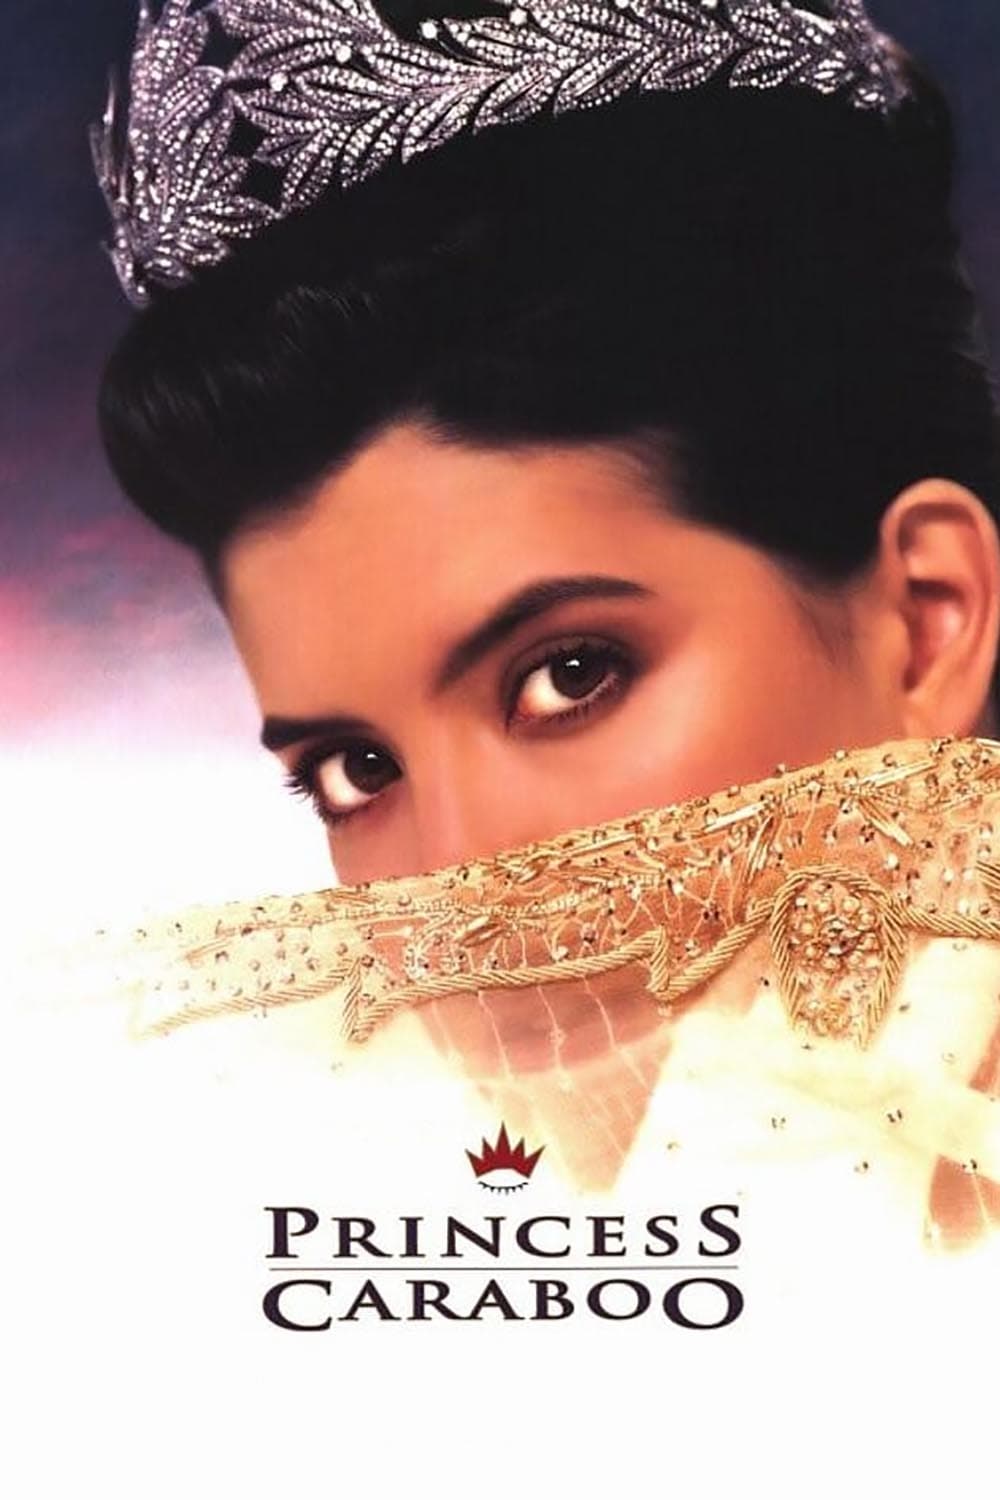 Princesa Caraboo (1994)